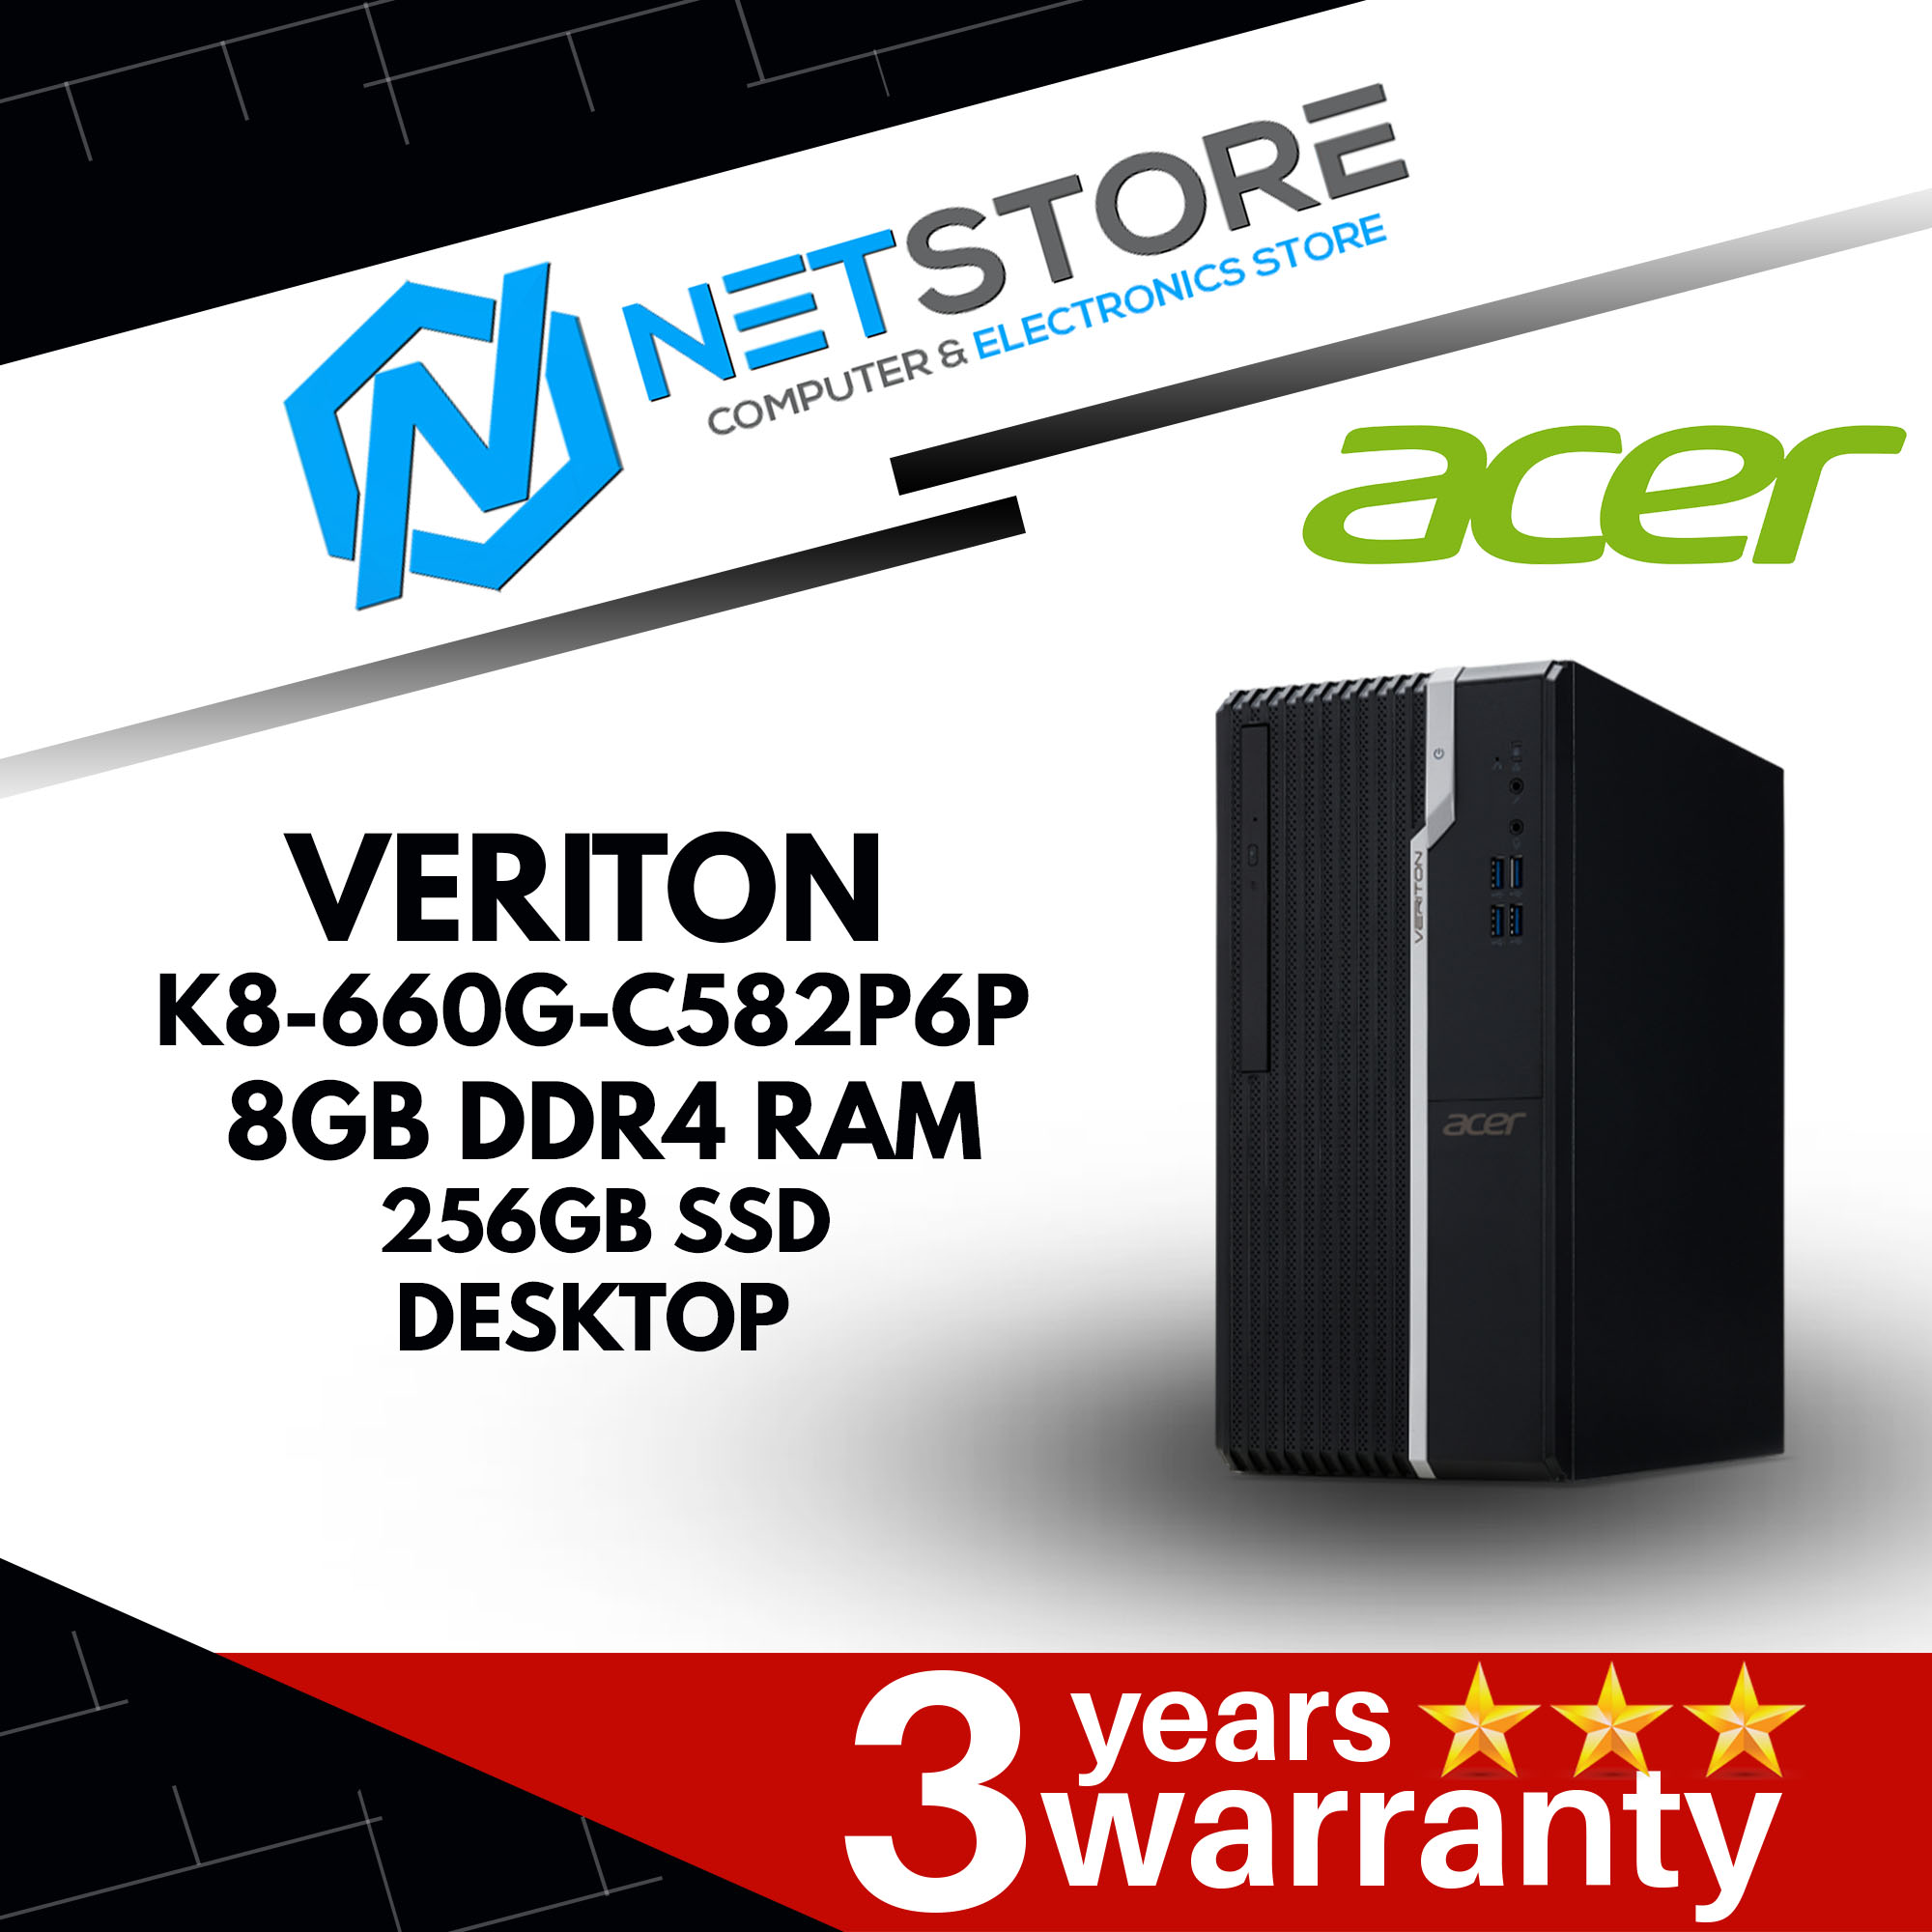 ACER VERITON K8-660G-C582P6P | 8GB DDR4 RAM | 256GB SSD DESKTOP